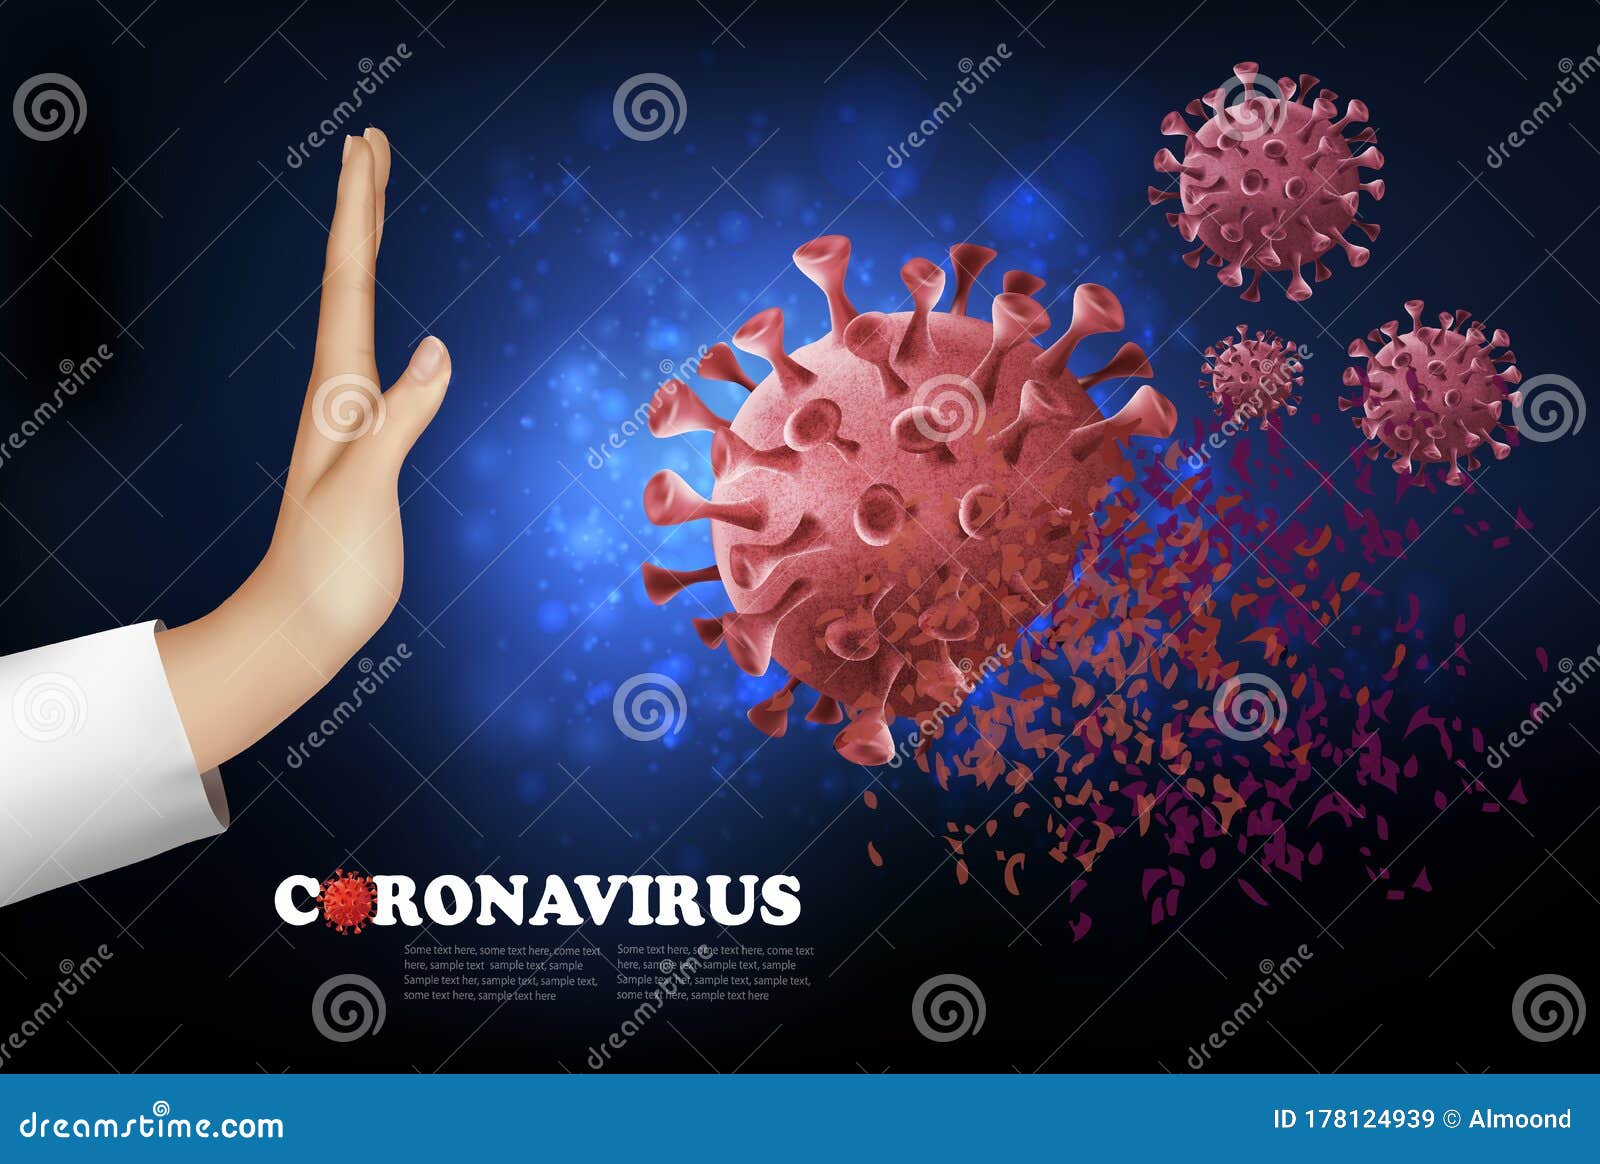 coranavirus pandemic background. hand destroying virus covid - 19